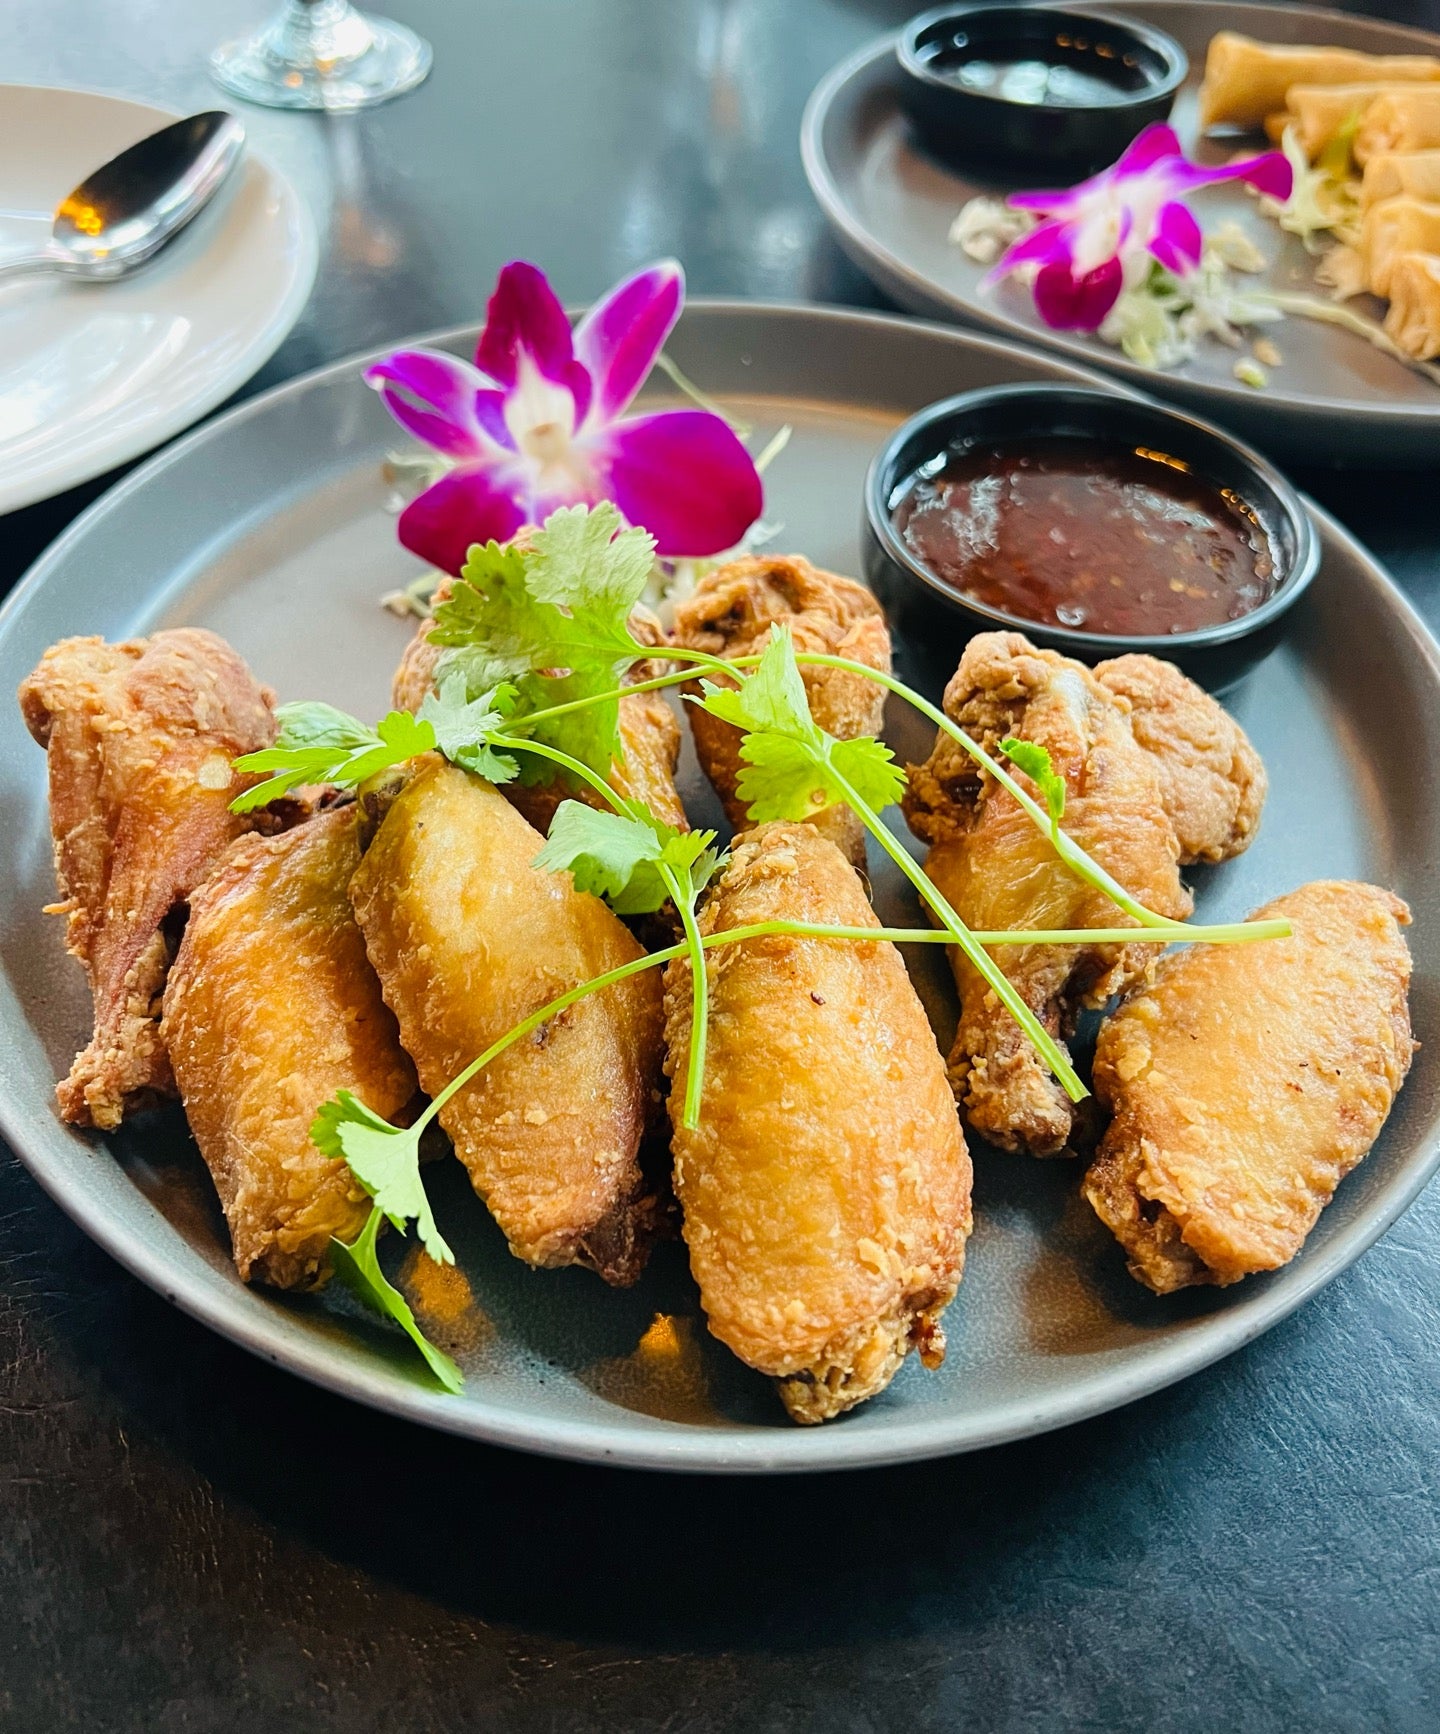 Noi Thai Cuisine - Downtown Seattle